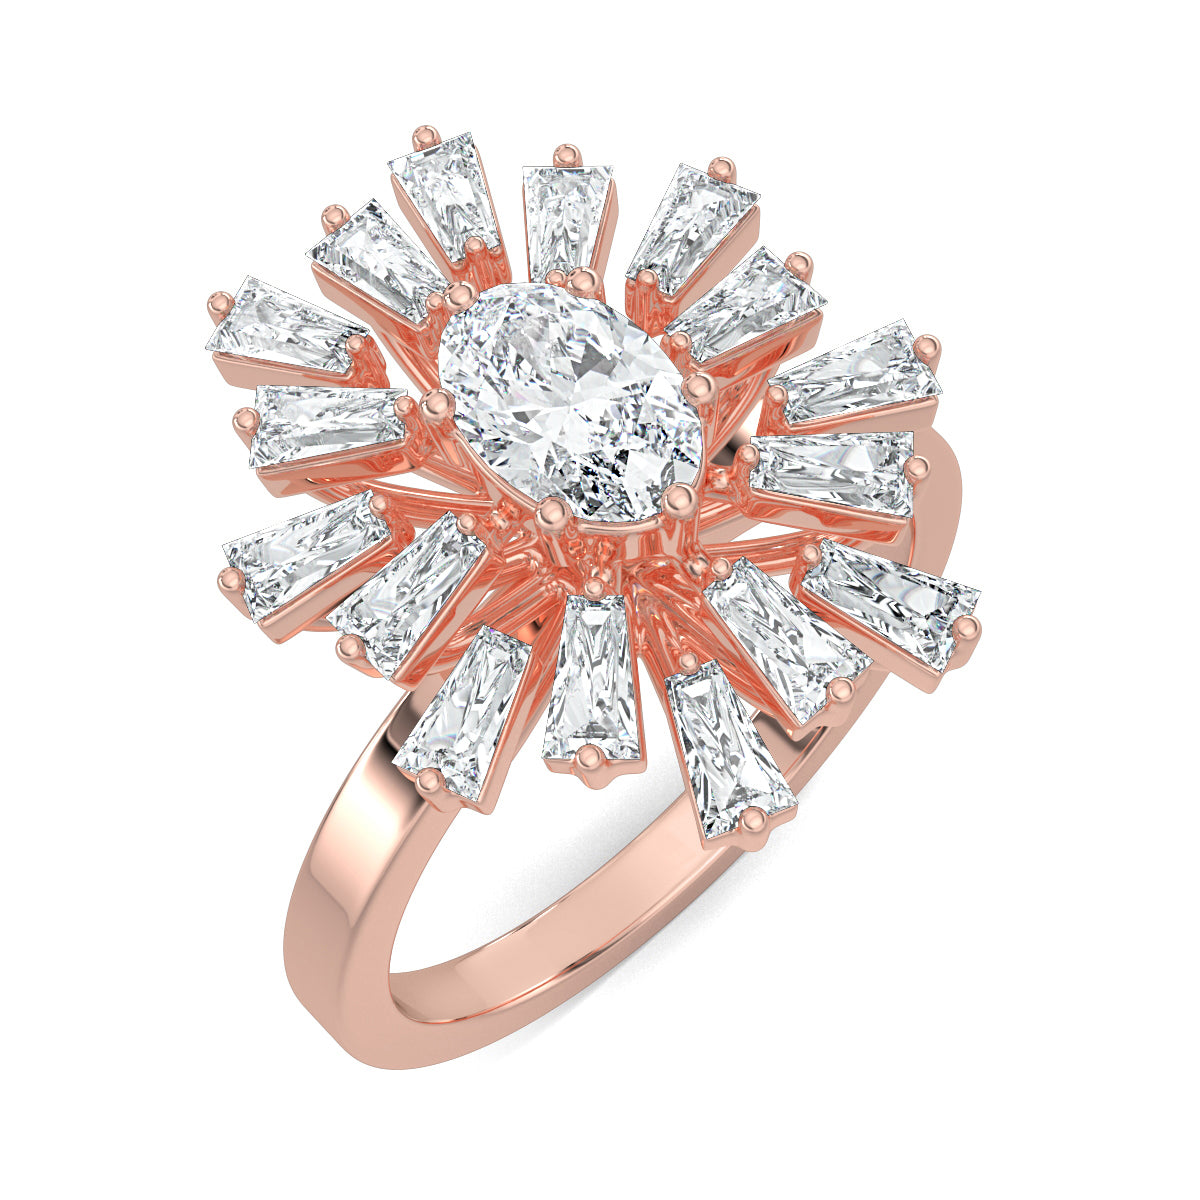 Rose Gold, Diamond Ring, Luminary Luster Diamond Ring, Natural Diamond Ring, Lab-Grown Diamond Ring, Oval Diamond Ring, Baguette Diamond Ring, Everyday Wear Ring, Sustainable Diamond Ring